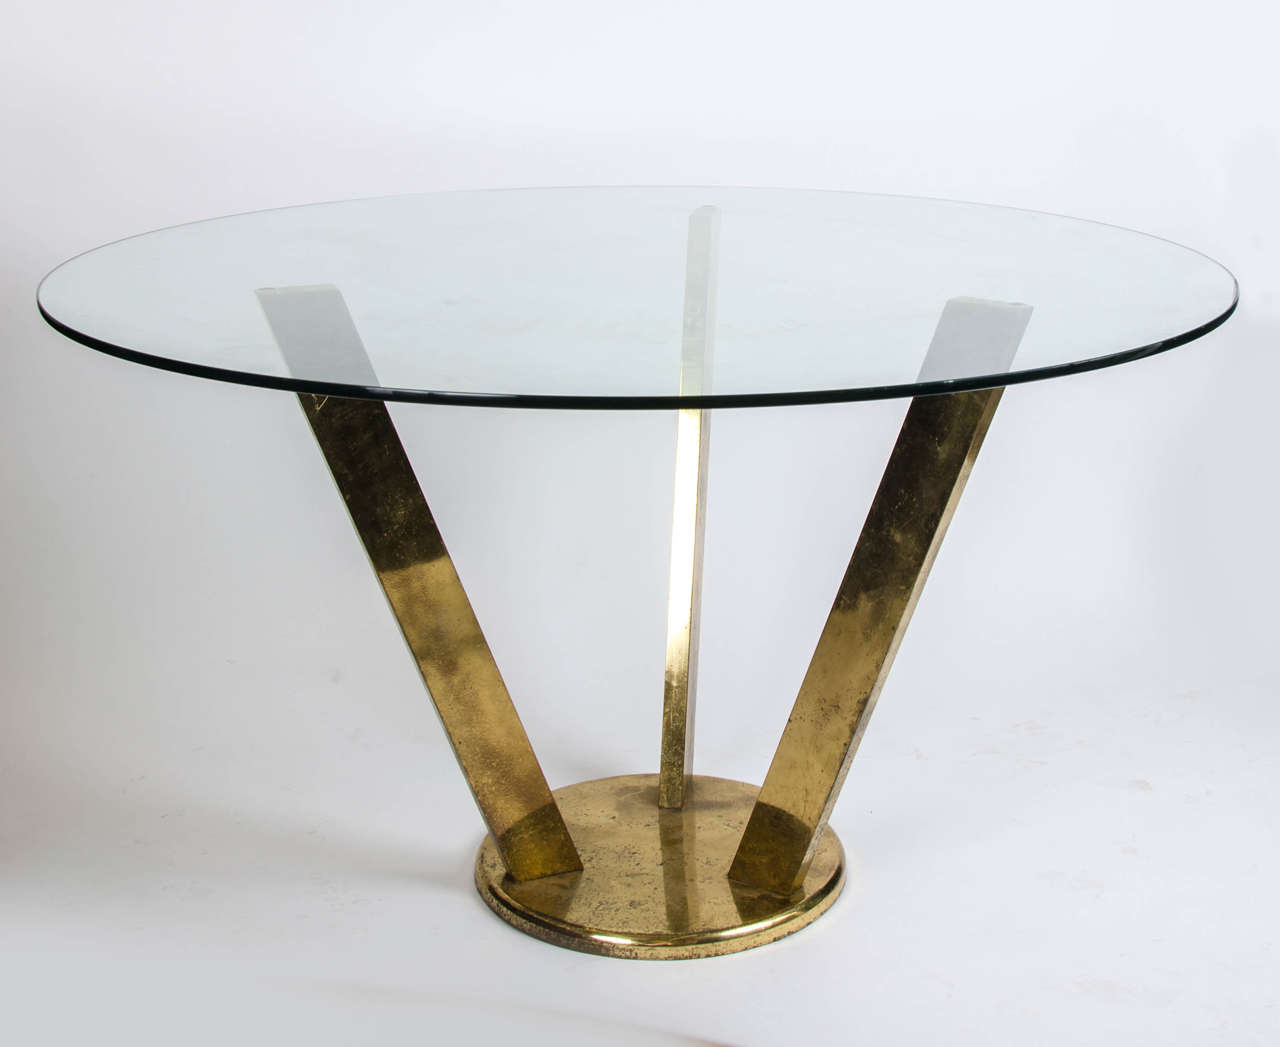 1955 - 60 Italian round glass top brass base Italian dining table